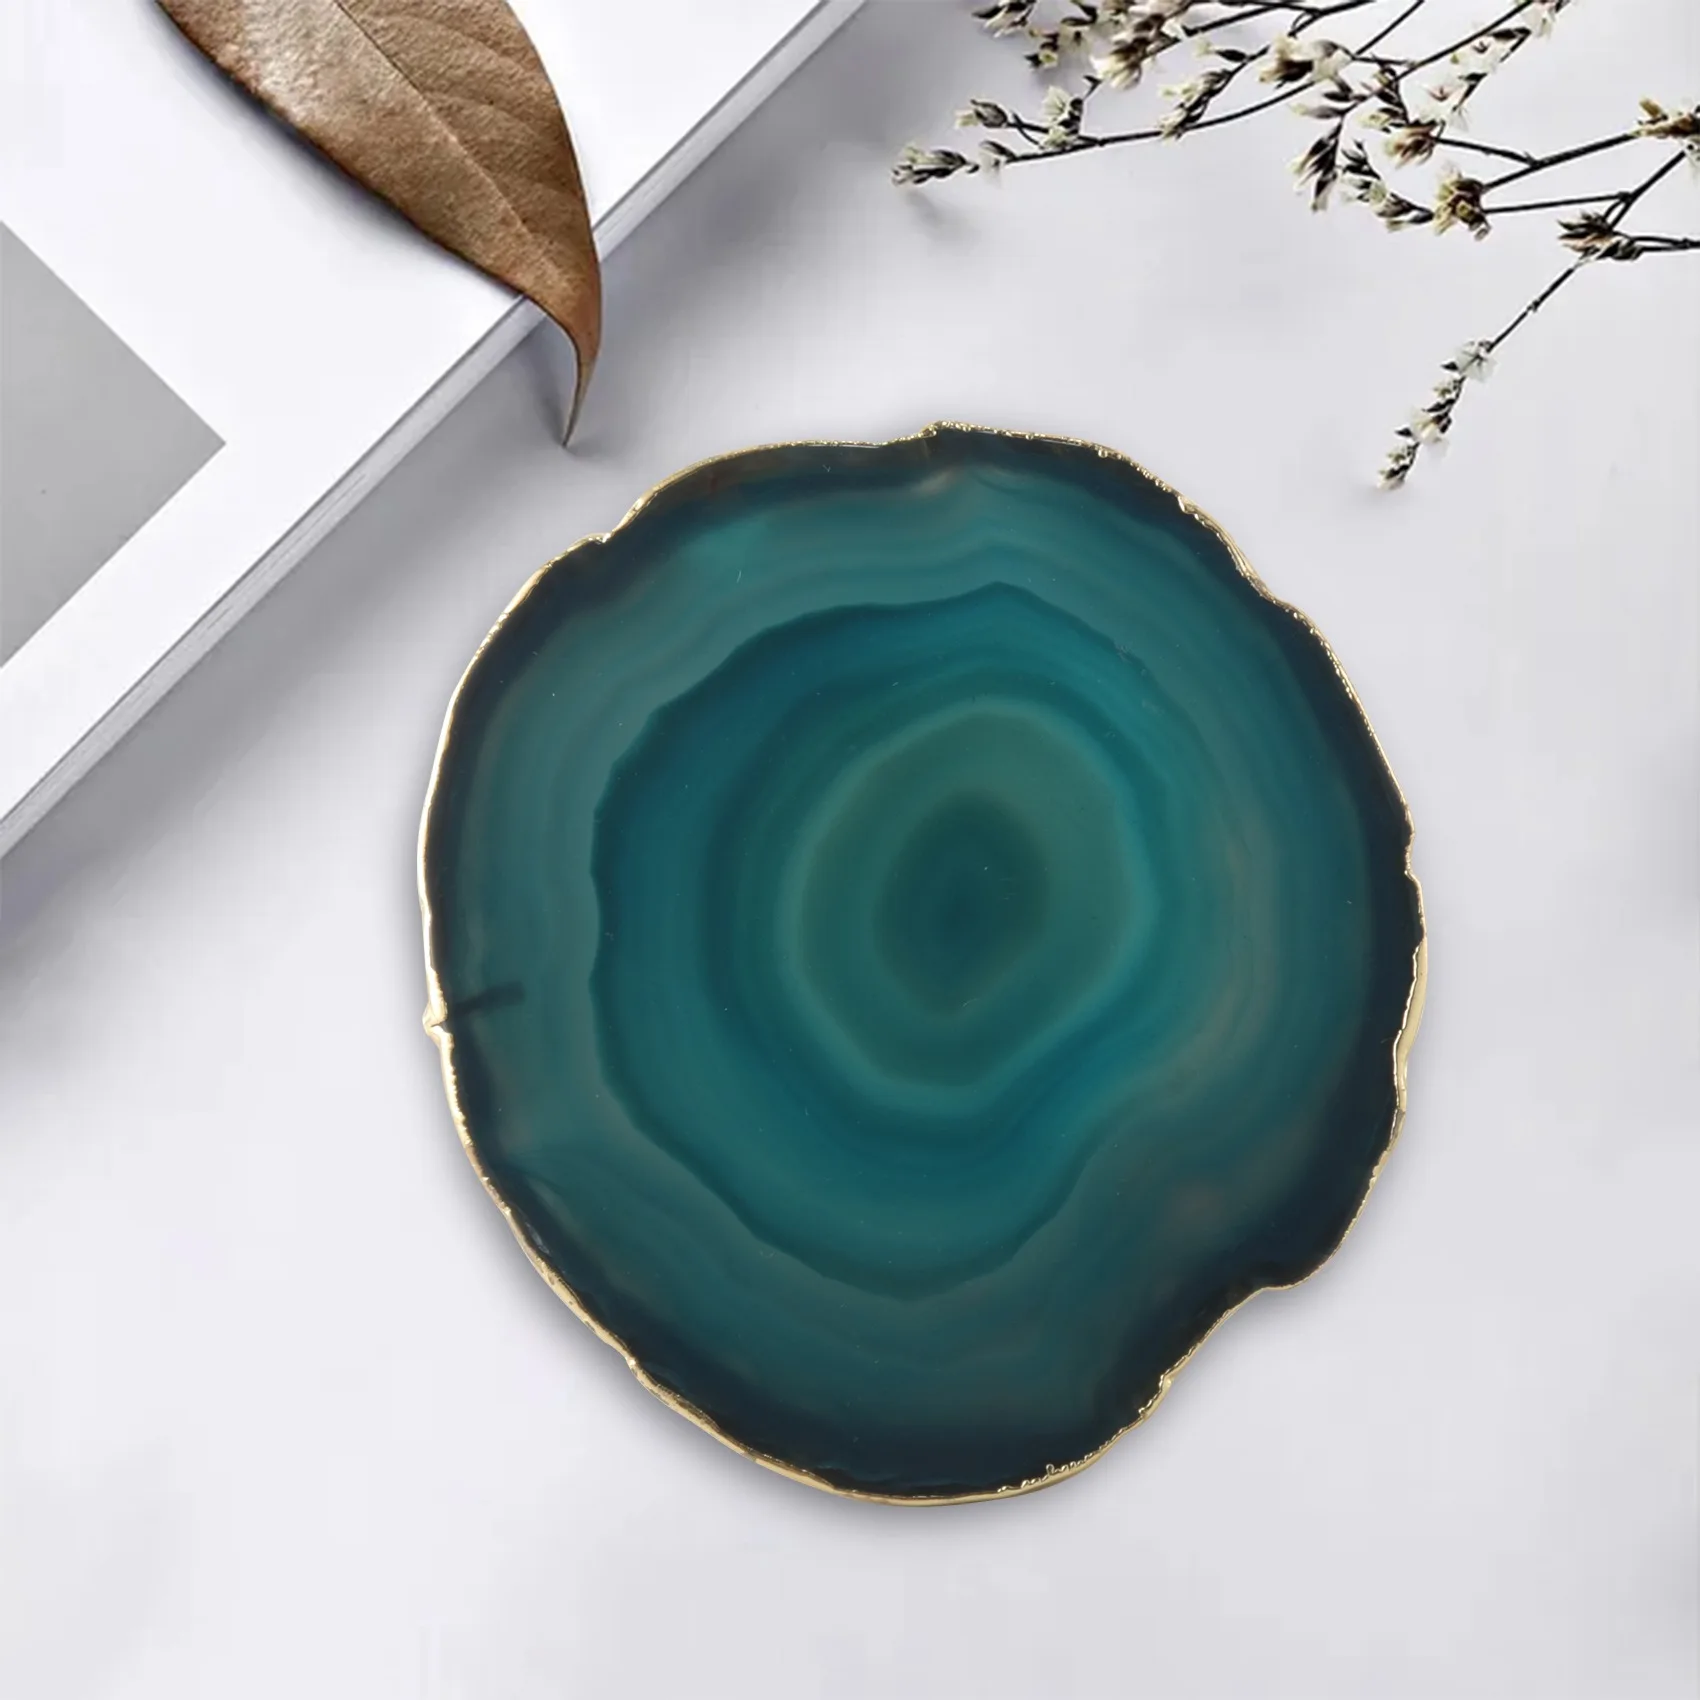 

2Pcs Agate Slice Blue Agate Coaster Teacup Tray Decorative Design Stone Coaster Gold Edges Home Decor Gemstone Coaster